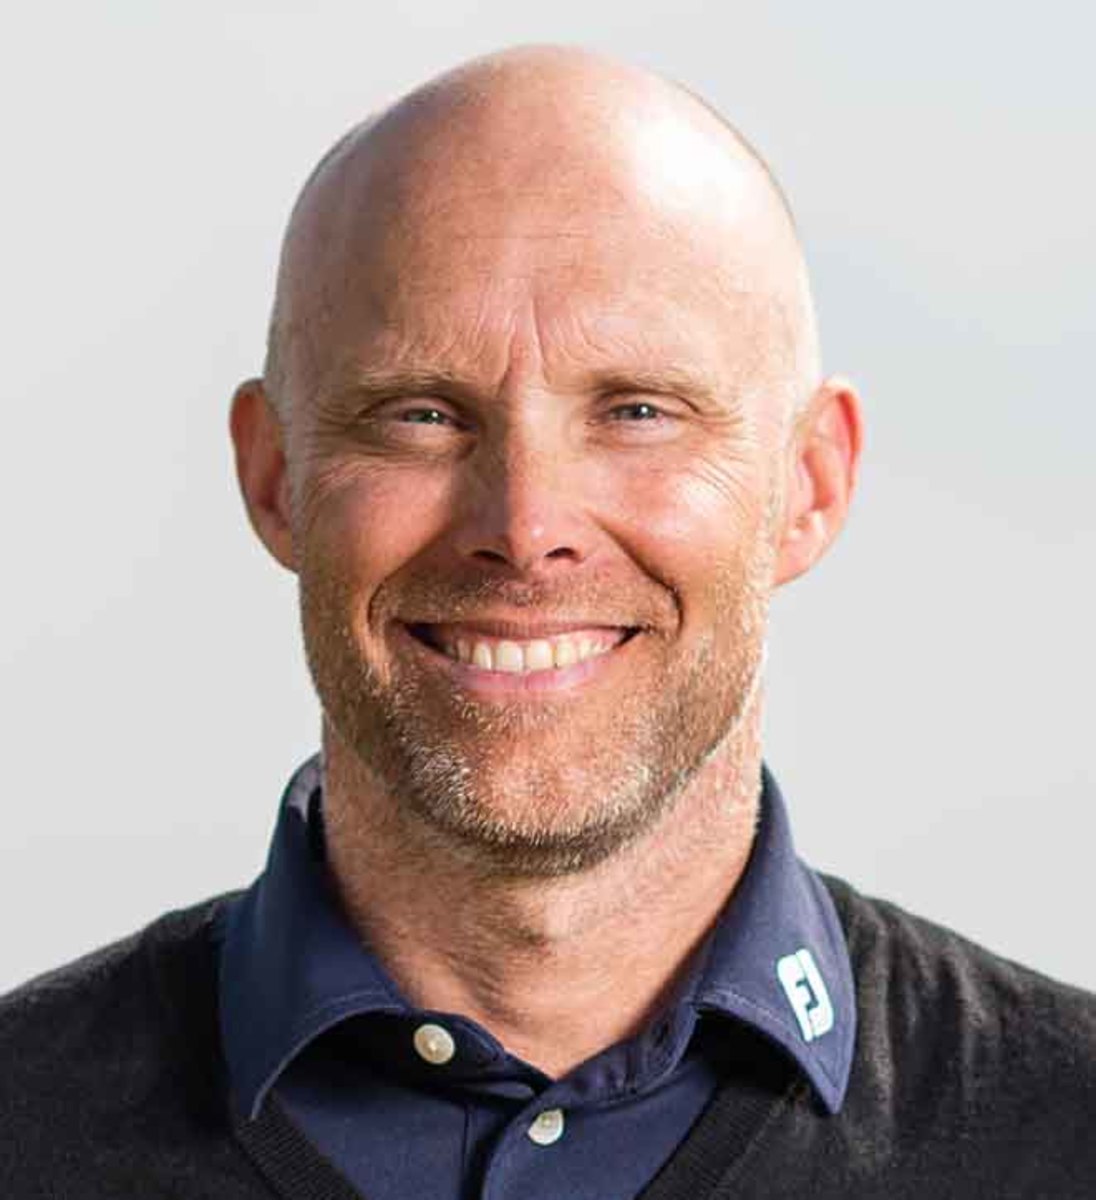 deWiz Golf co-founder Markus Westerberg